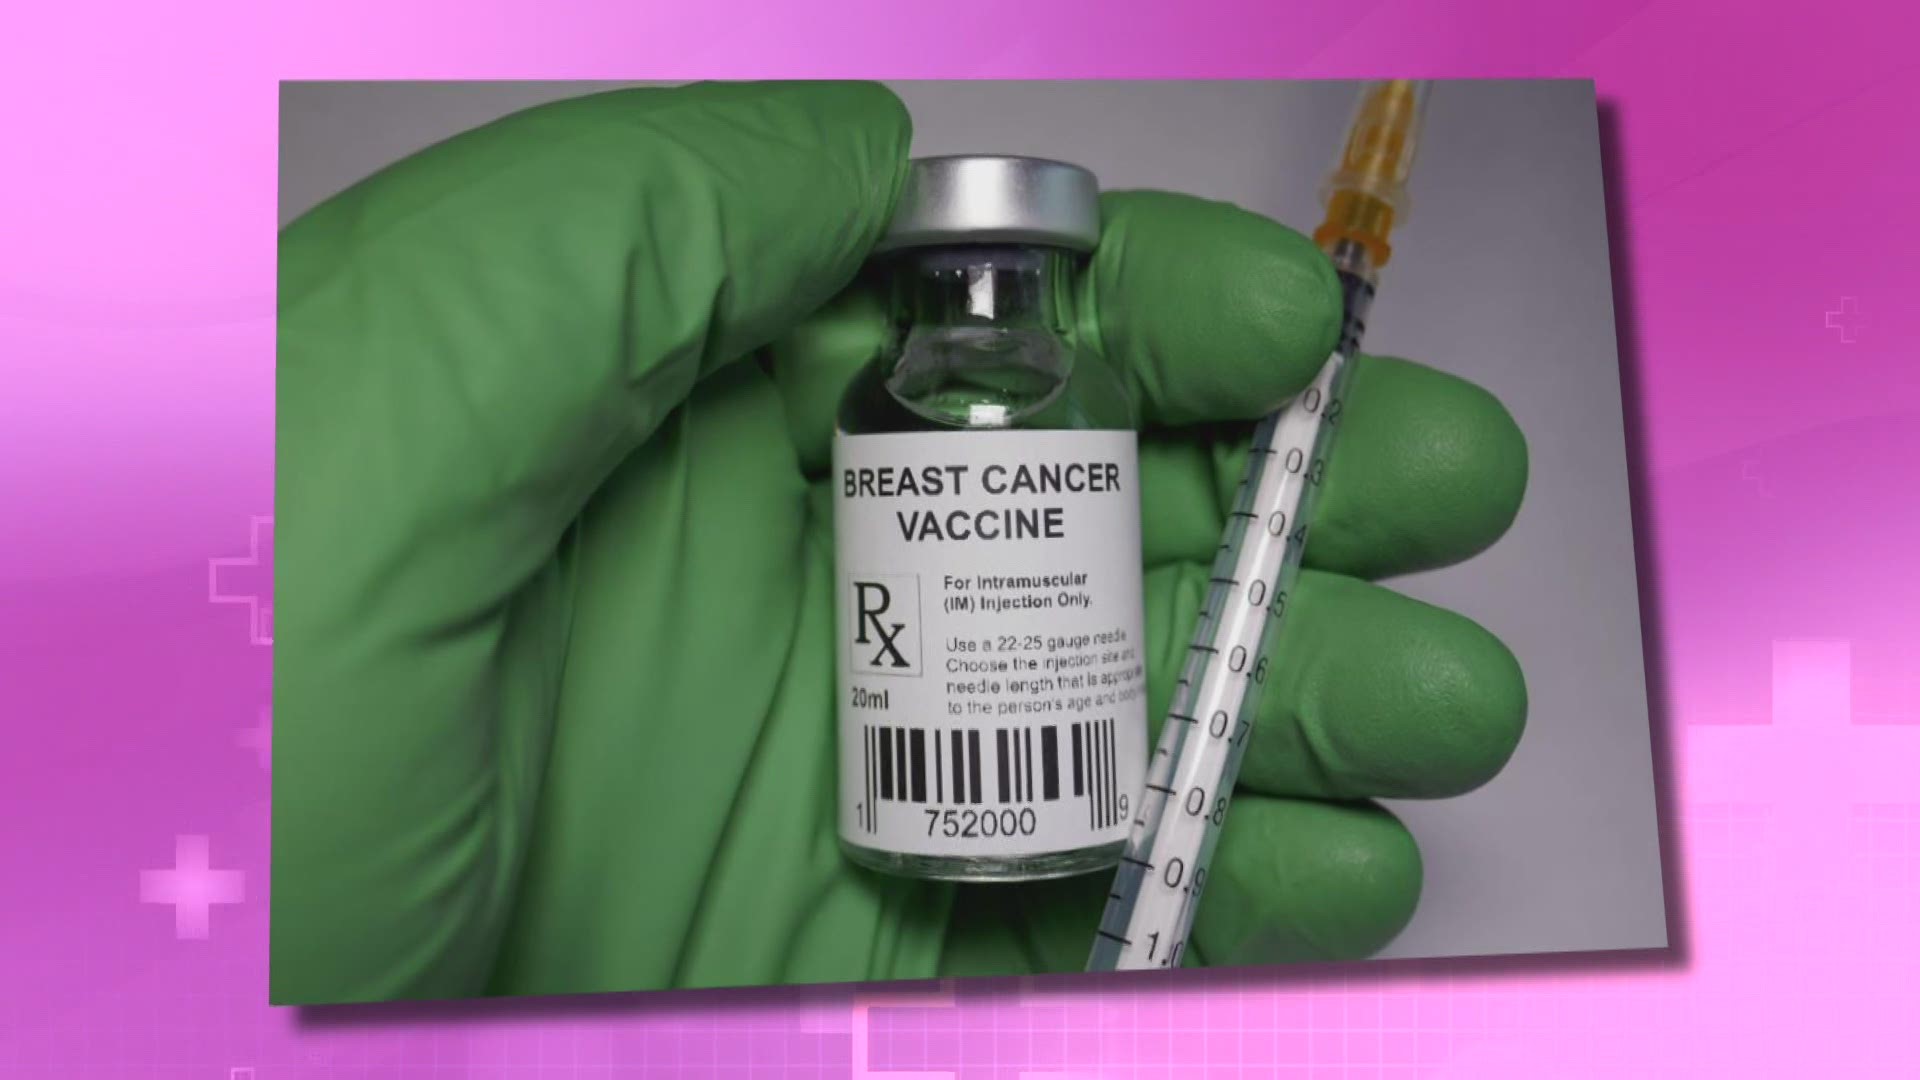 Breast cancer vaccine trials are underway